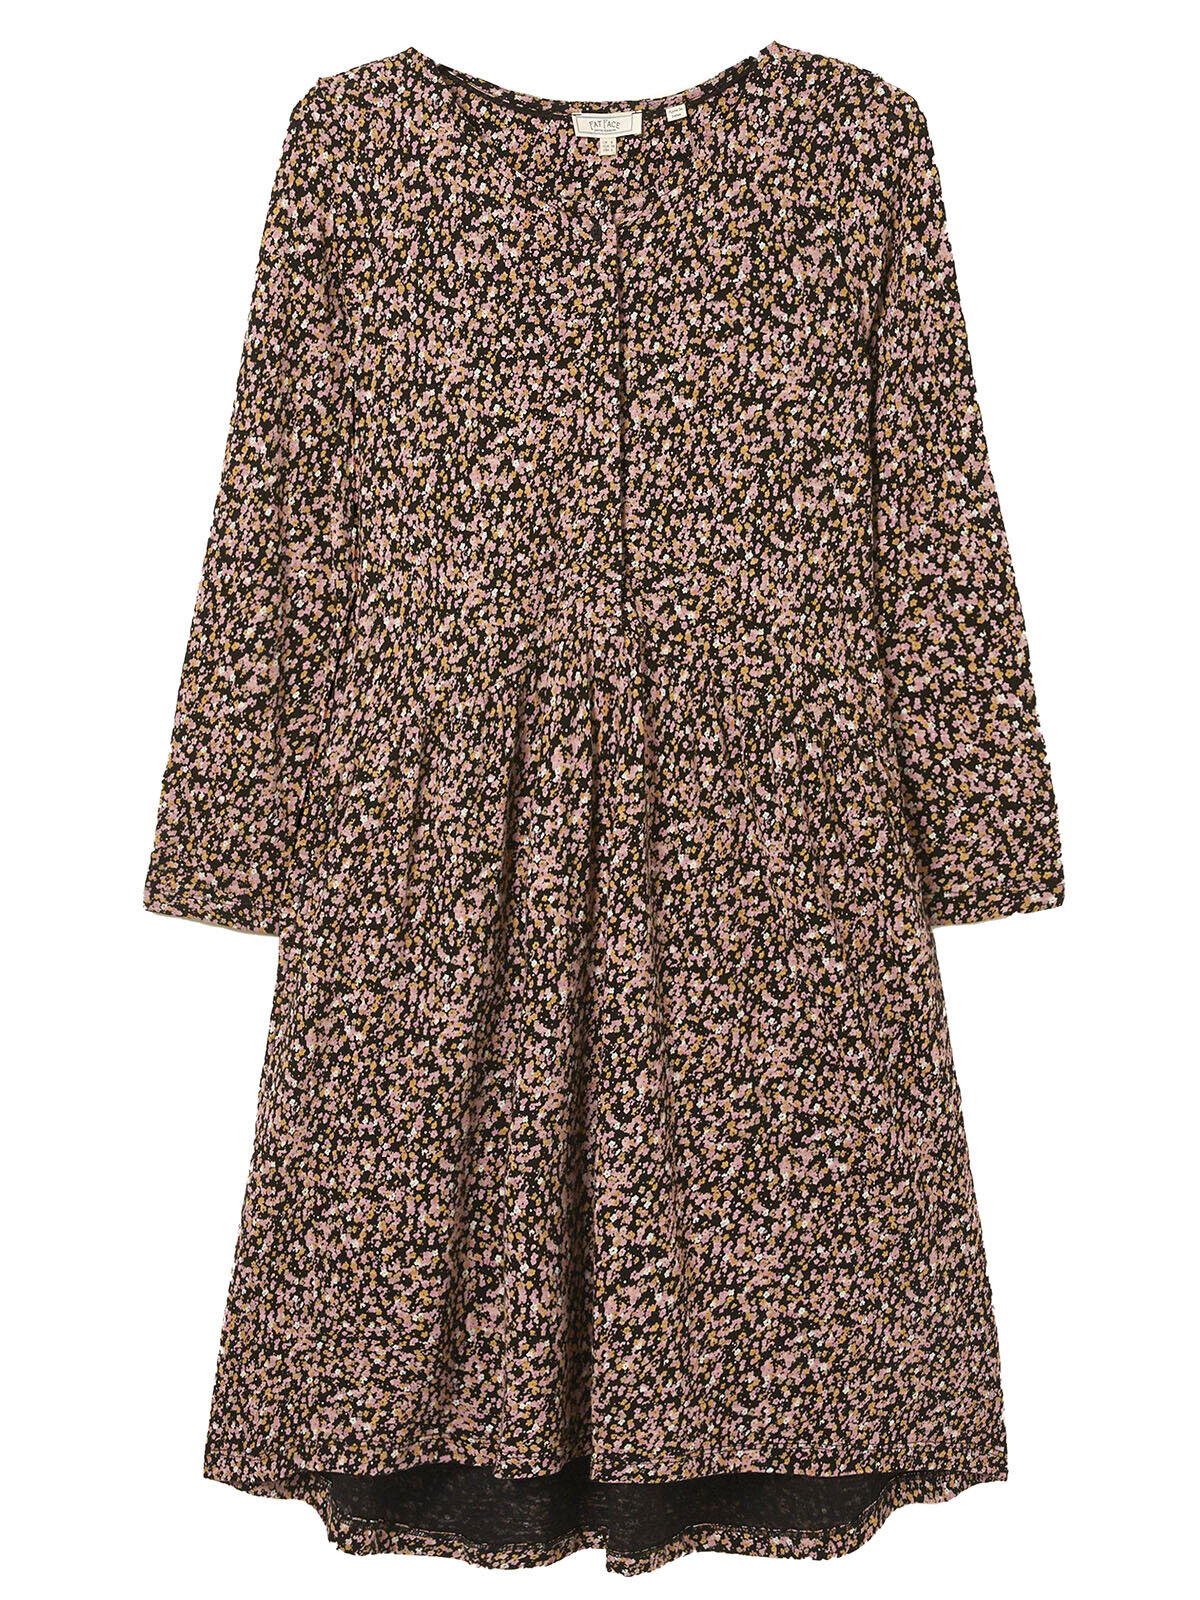 EX Fat Face Multi Nina Confetti Ditsy Print Dress in Sizes 8, 12, 16, 18 RRP £46